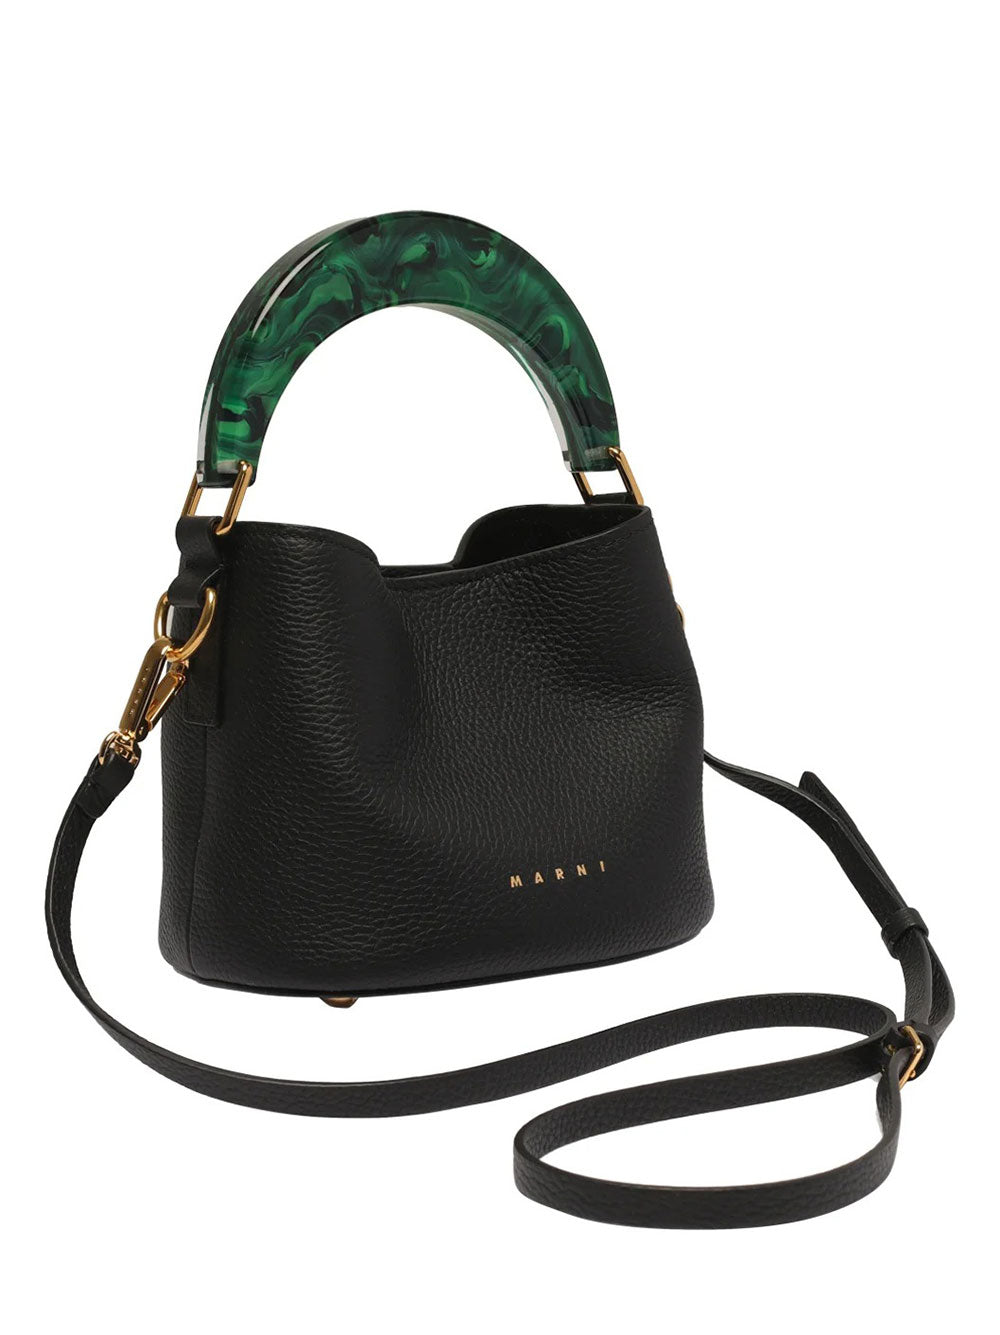 Marni 'Venice' Mini Bucket Bag